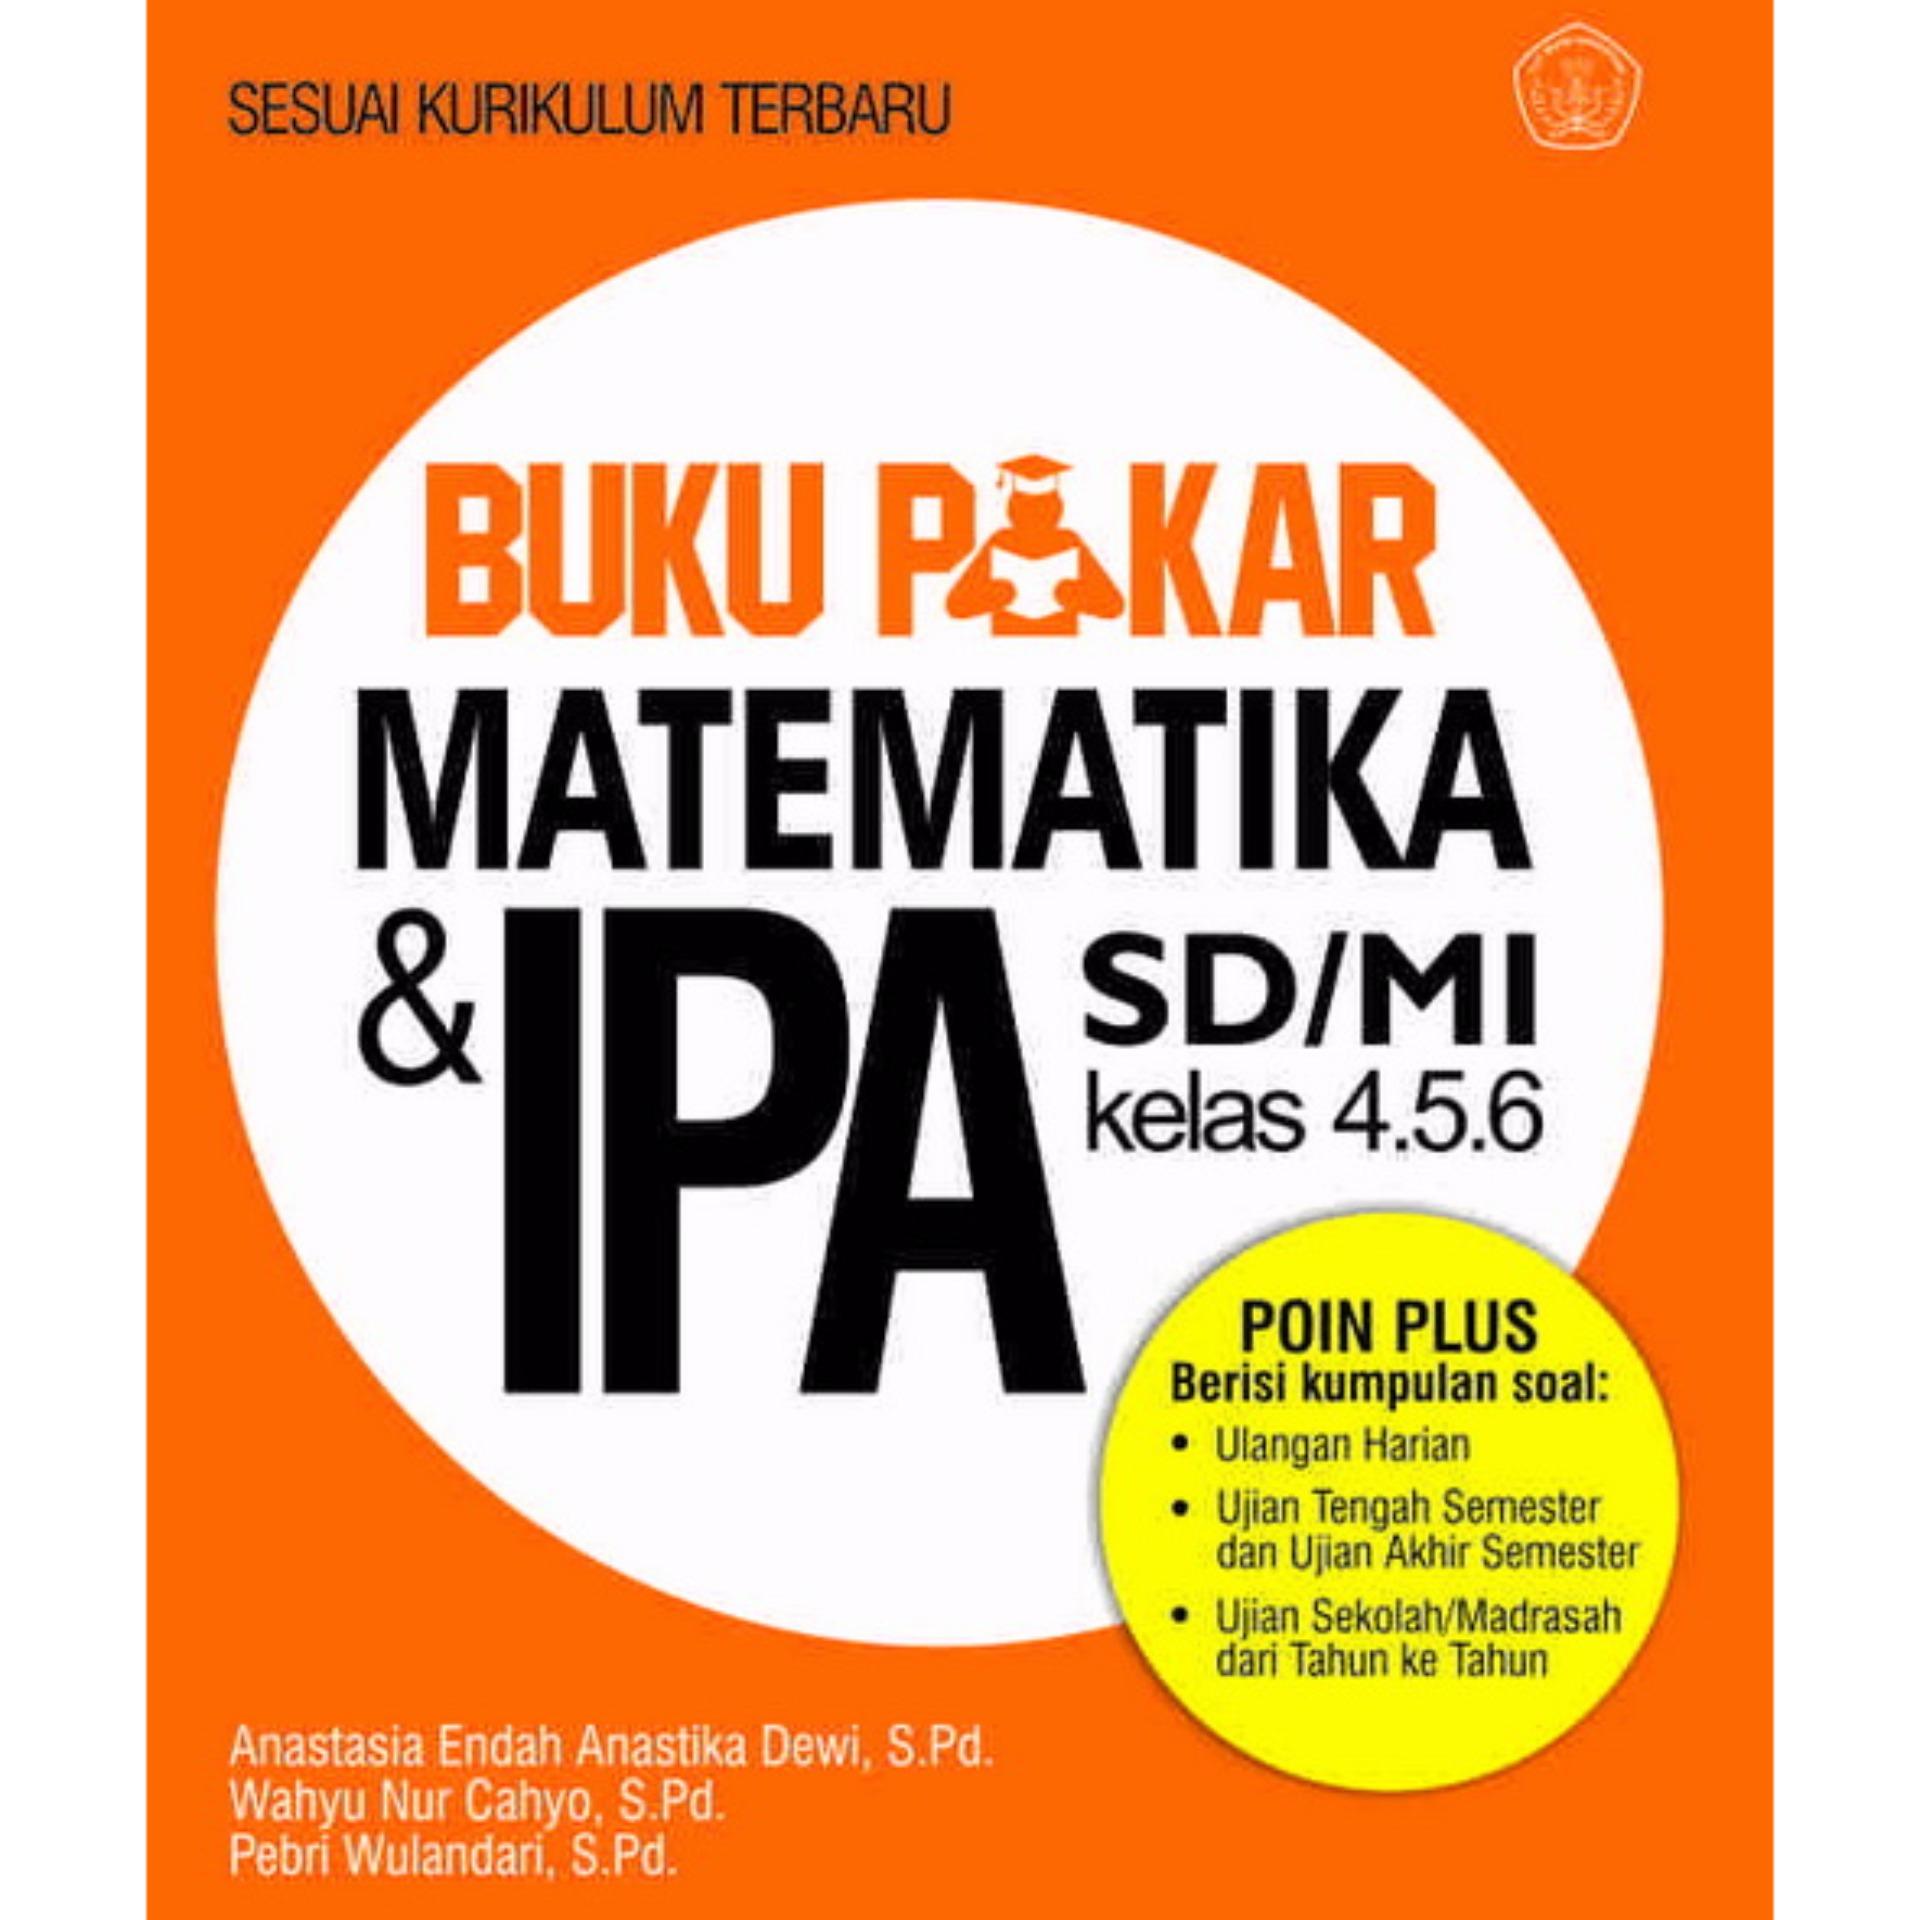 Buku Pakar Matematika & IPA SD MI kelas 4 5 6